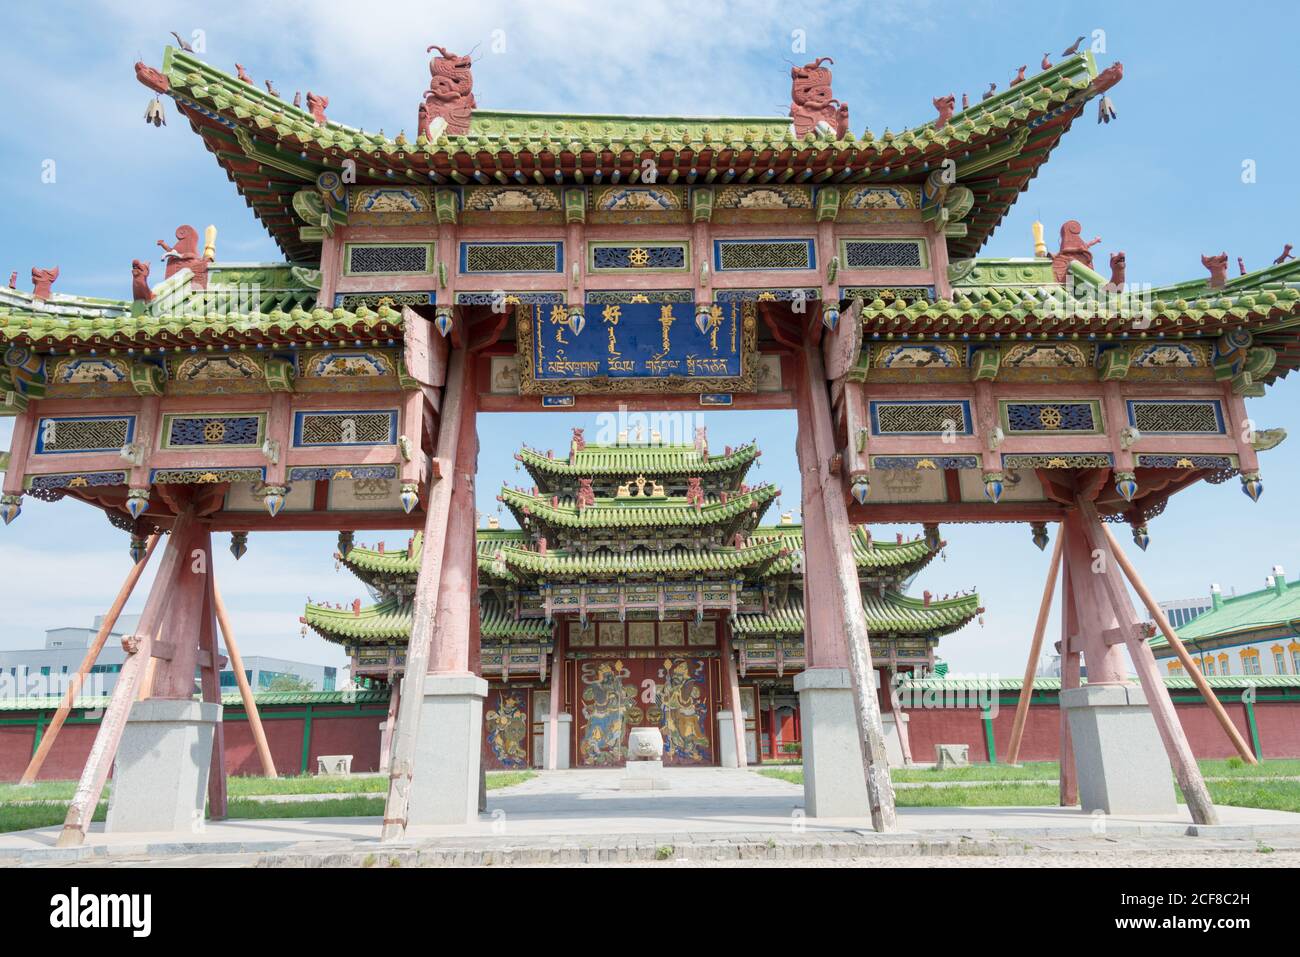 ULAANBAATAR, MONGOLIA - Gate at Winter Palace of the Bogd Khan. a famous Tourist spot in Ulaanbaatar, Mongolia. Stock Photo